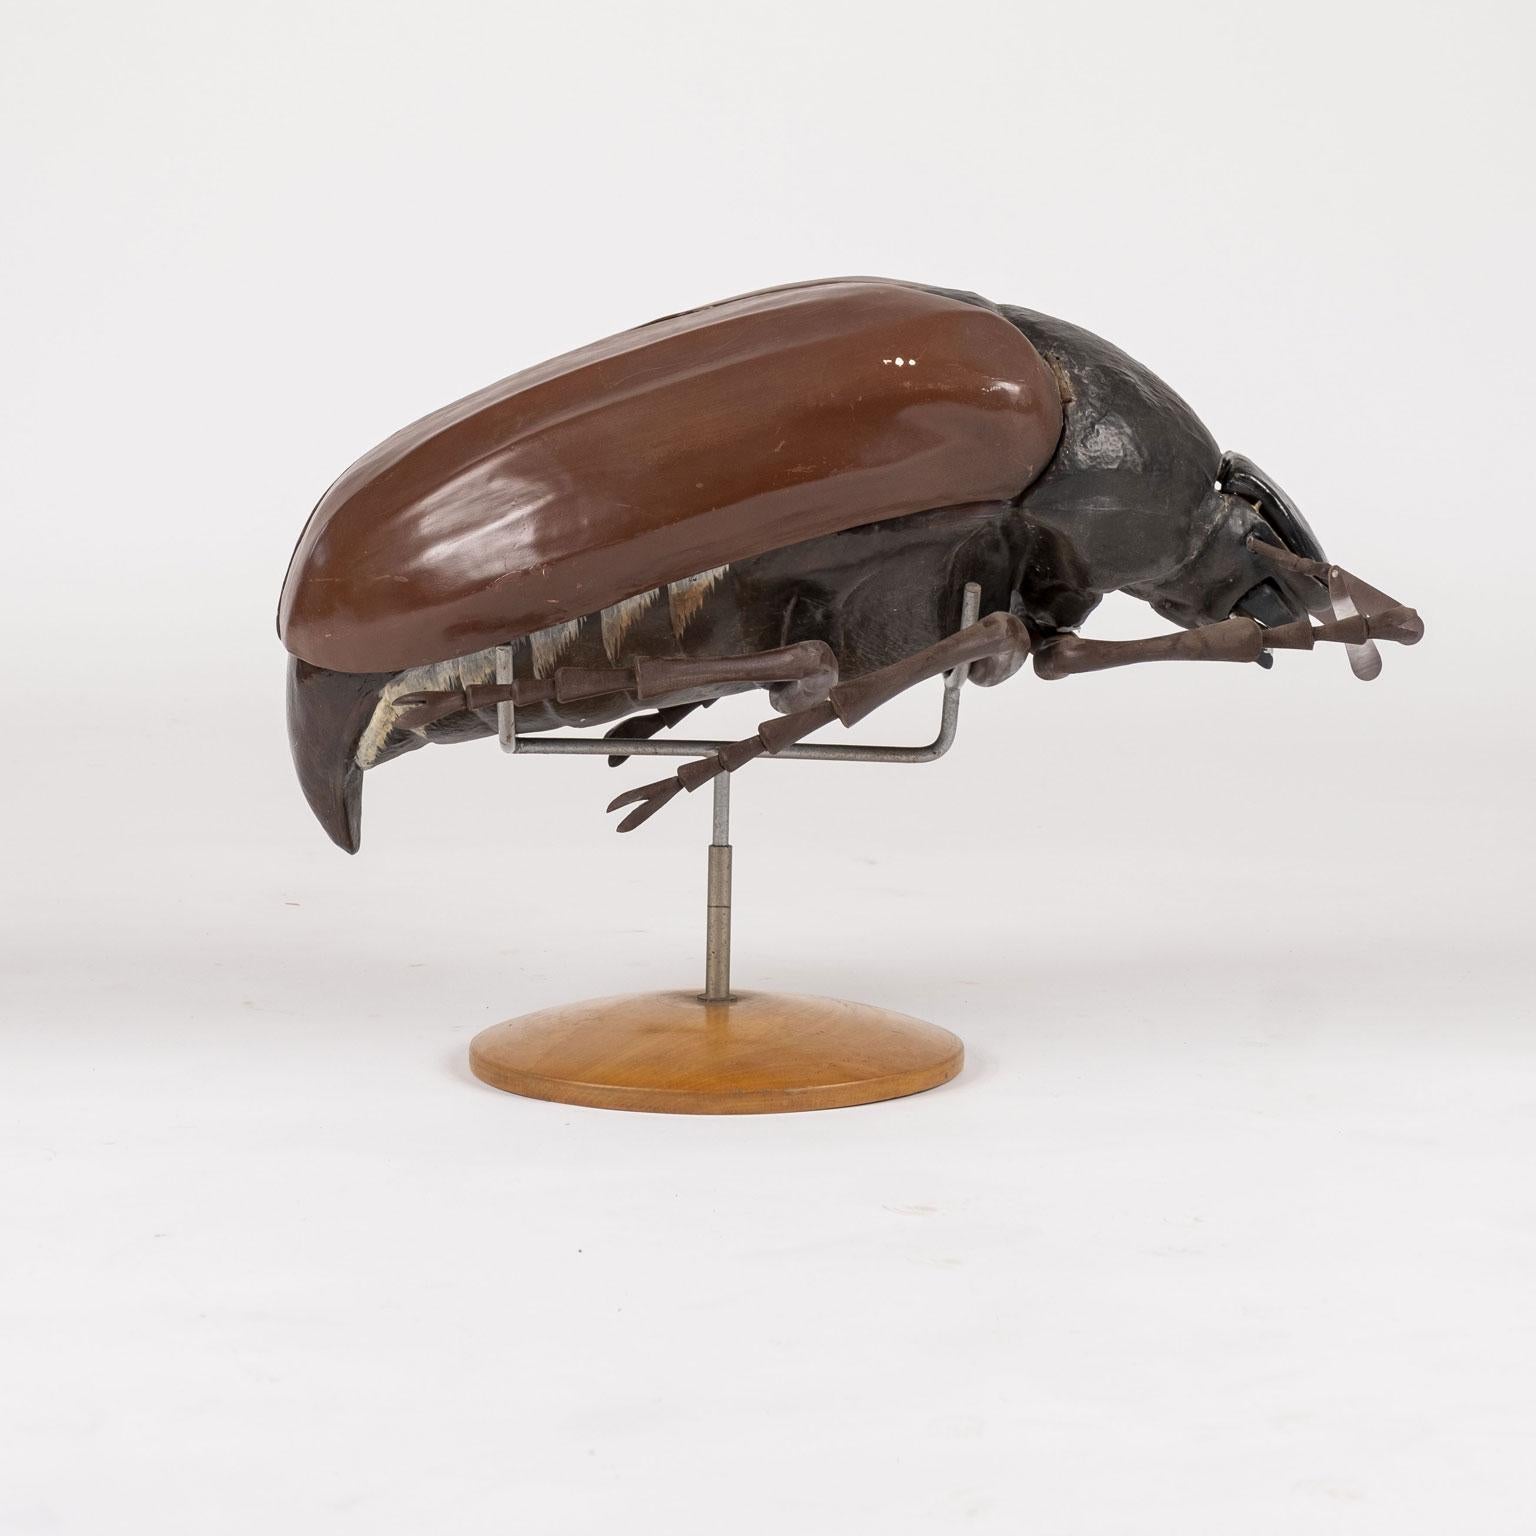 Cast Large Sculpture of Beetle in Flight For Sale